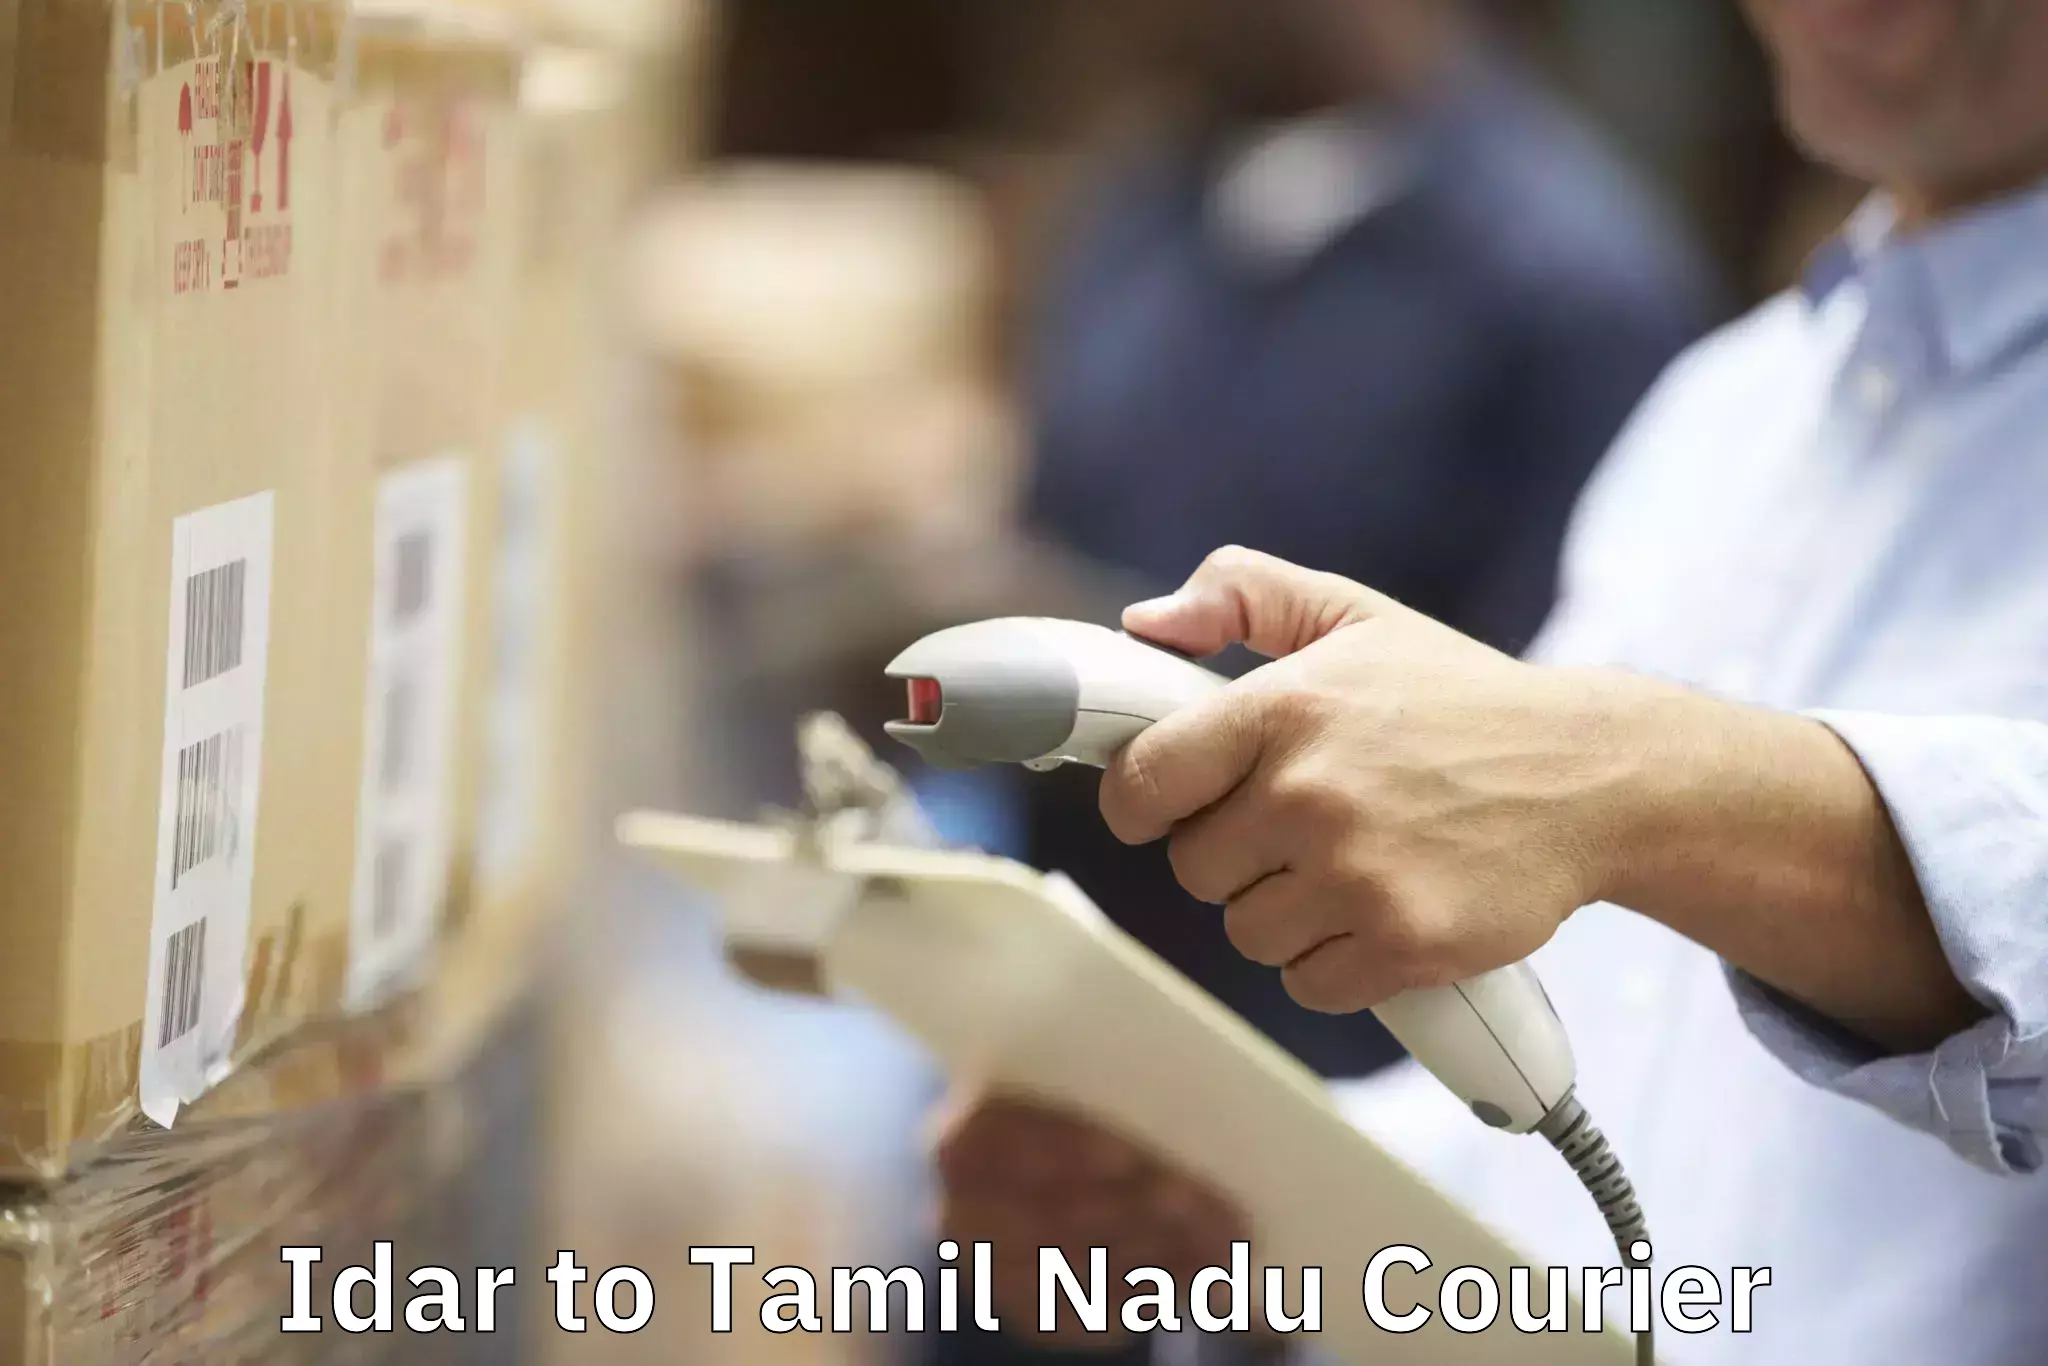 Quality moving company Idar to Tamil Nadu